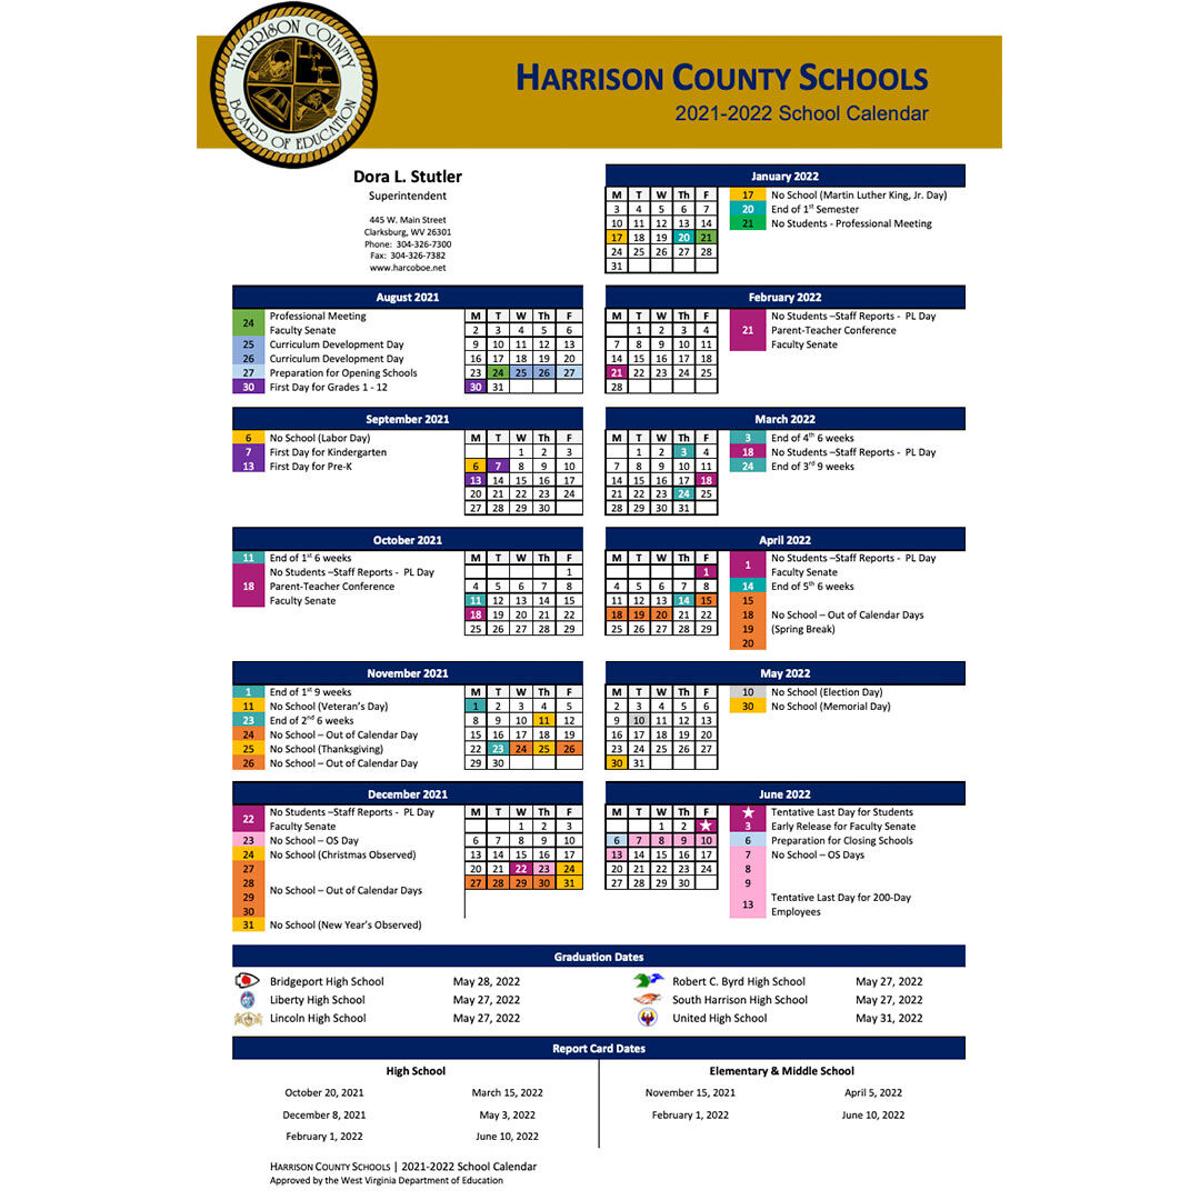 Ohio University Academic Calendar 2022 2023 Harrison County Schools Academic Calendar 2021-22 | Wv News | Wvnews.com